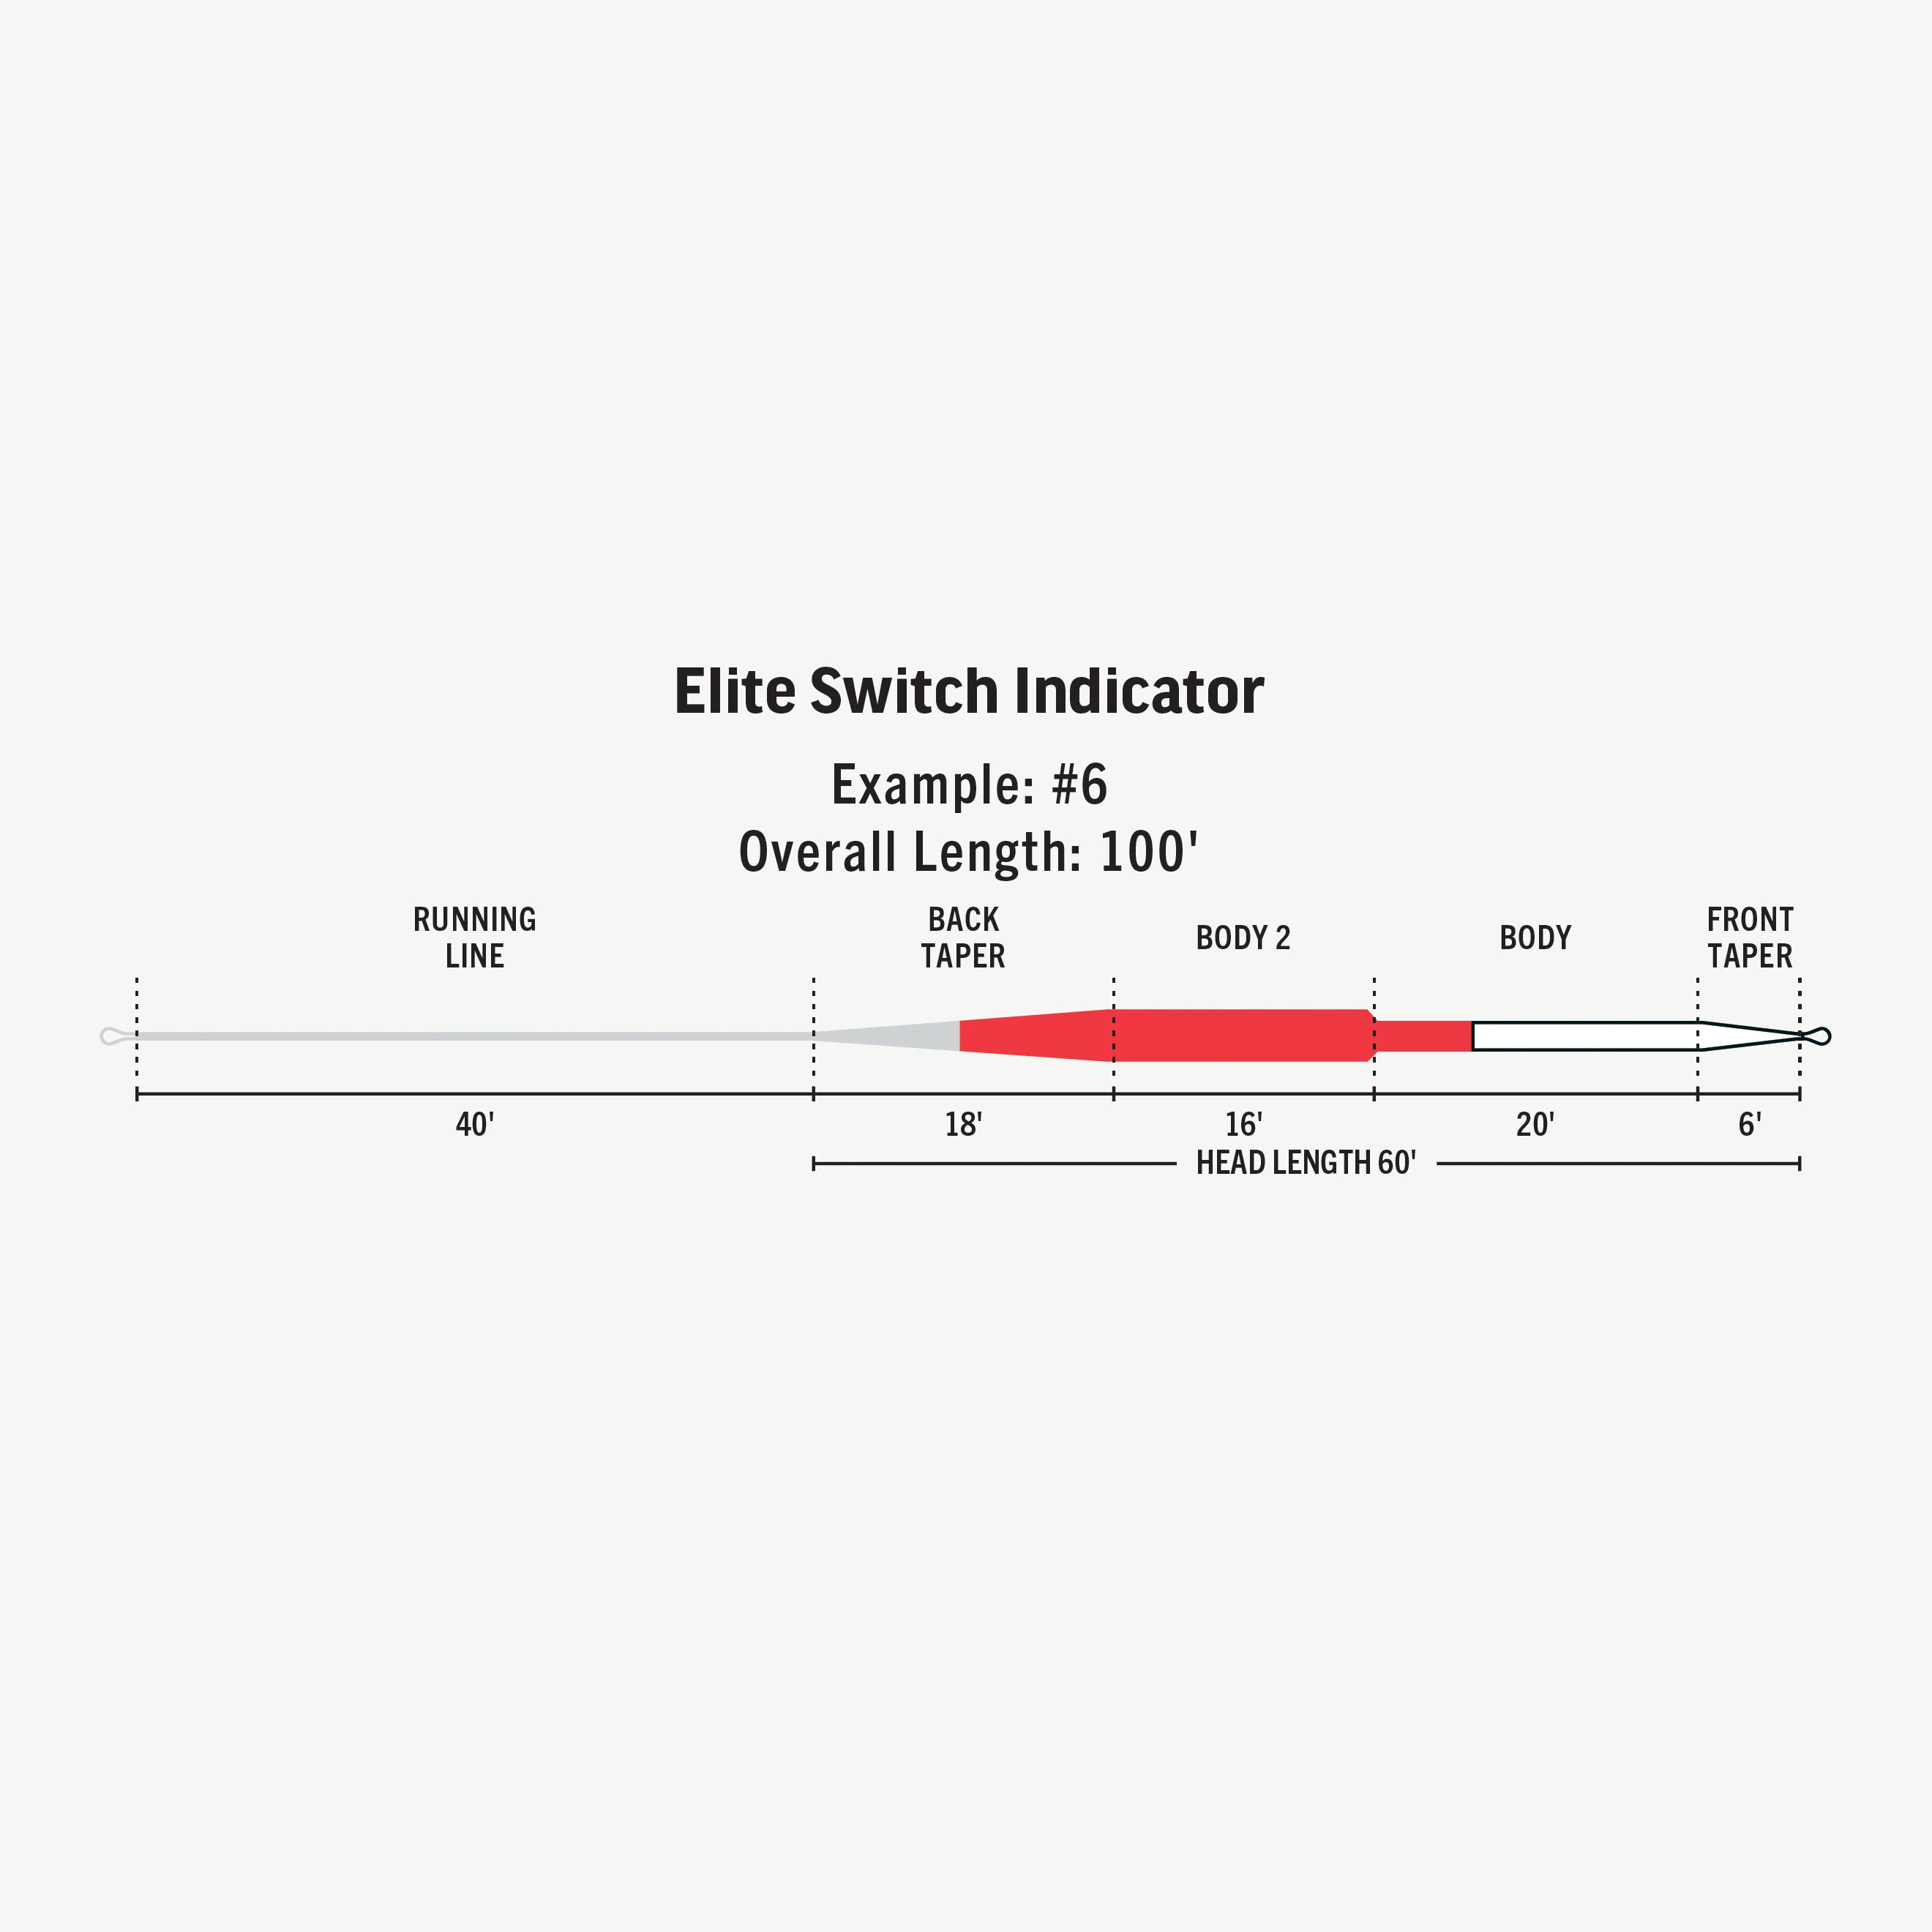 Elite Switch Indicator